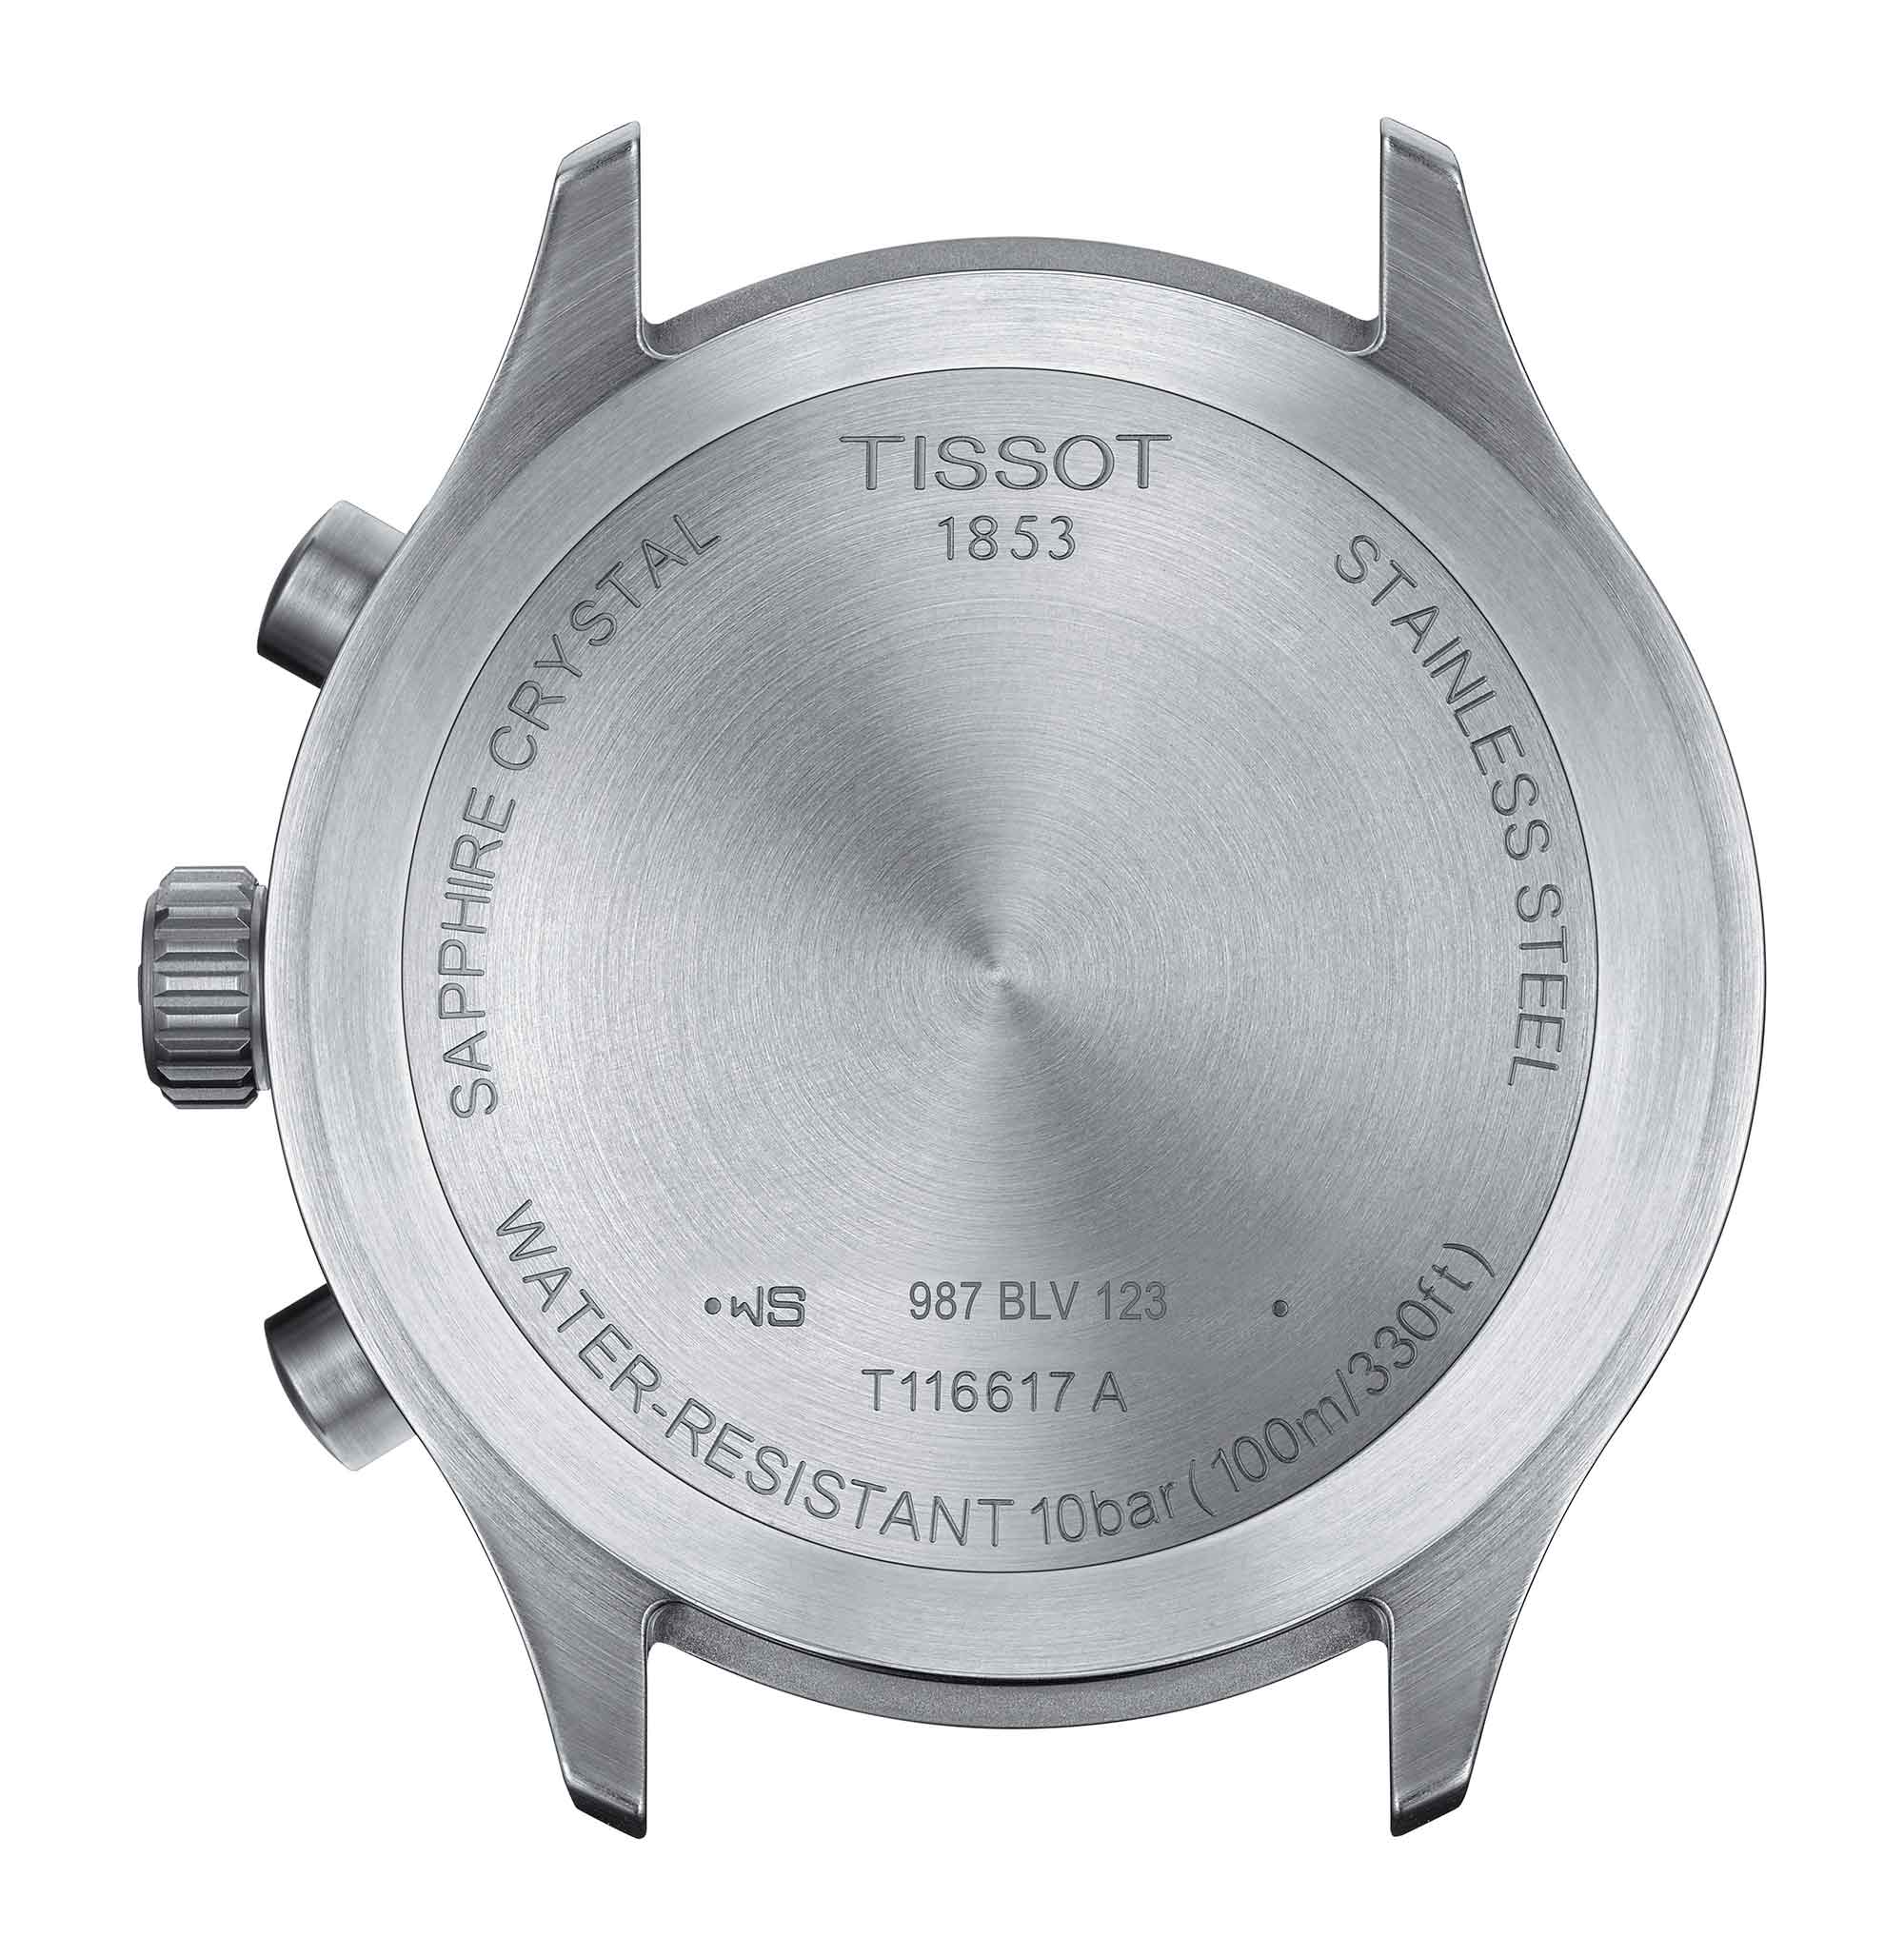 Reloj Tissot Hombre Classic Chrono Xl T116.617.11.037.00